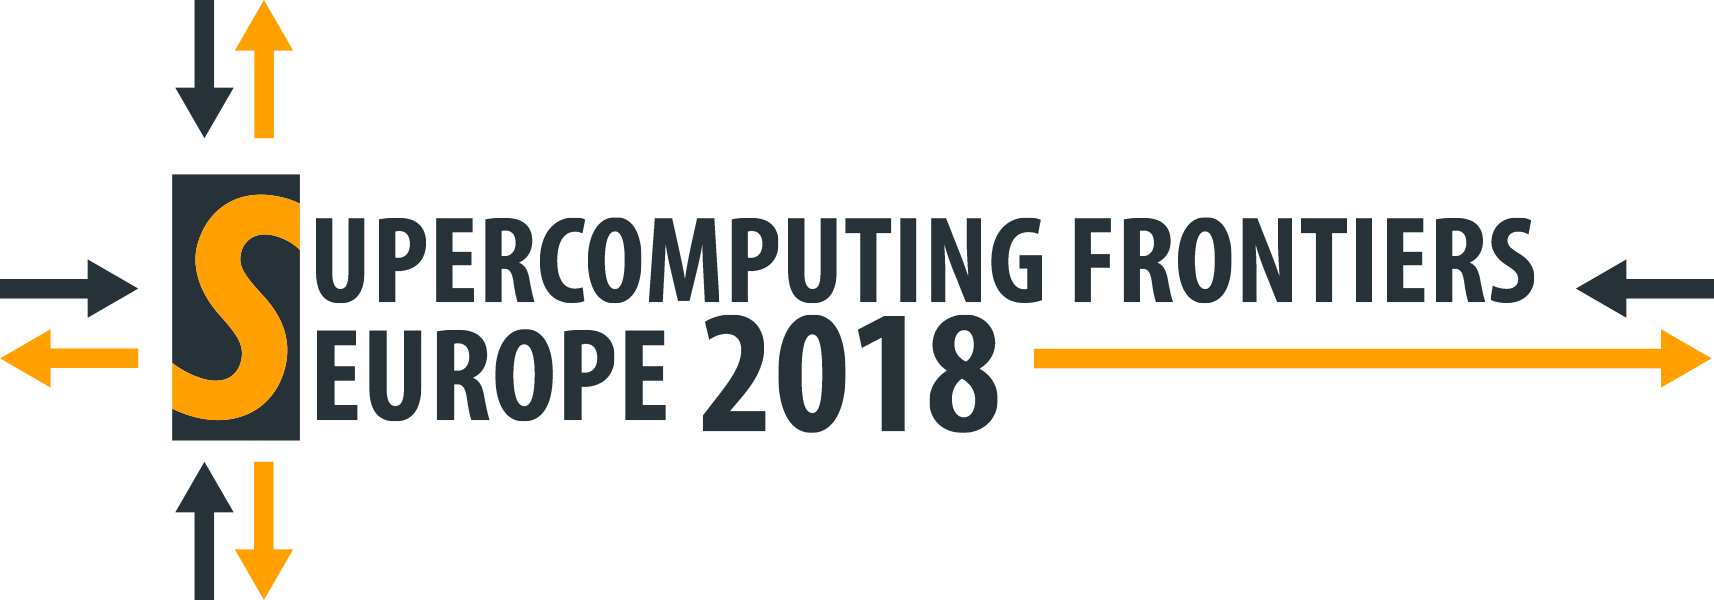 Supercomputing Frontiers Europe 2018